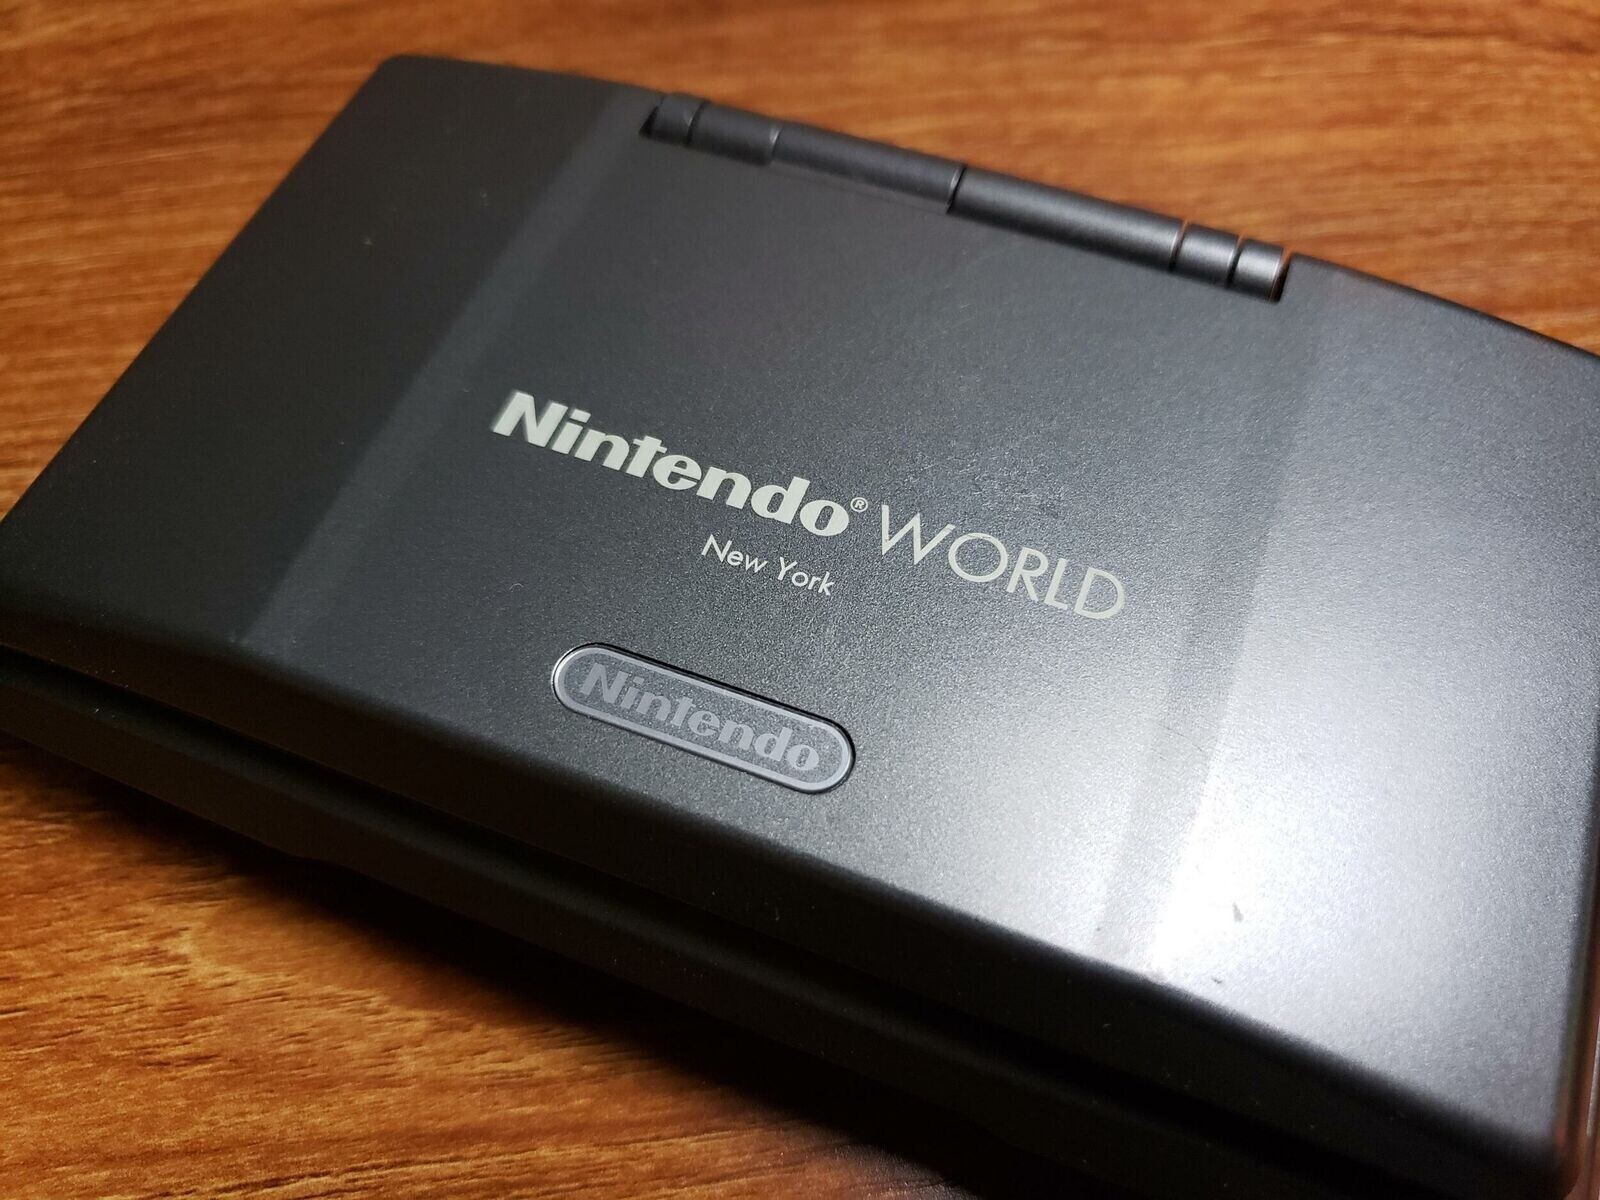  Nintendo DS Nintendo World New York Engraved Console 